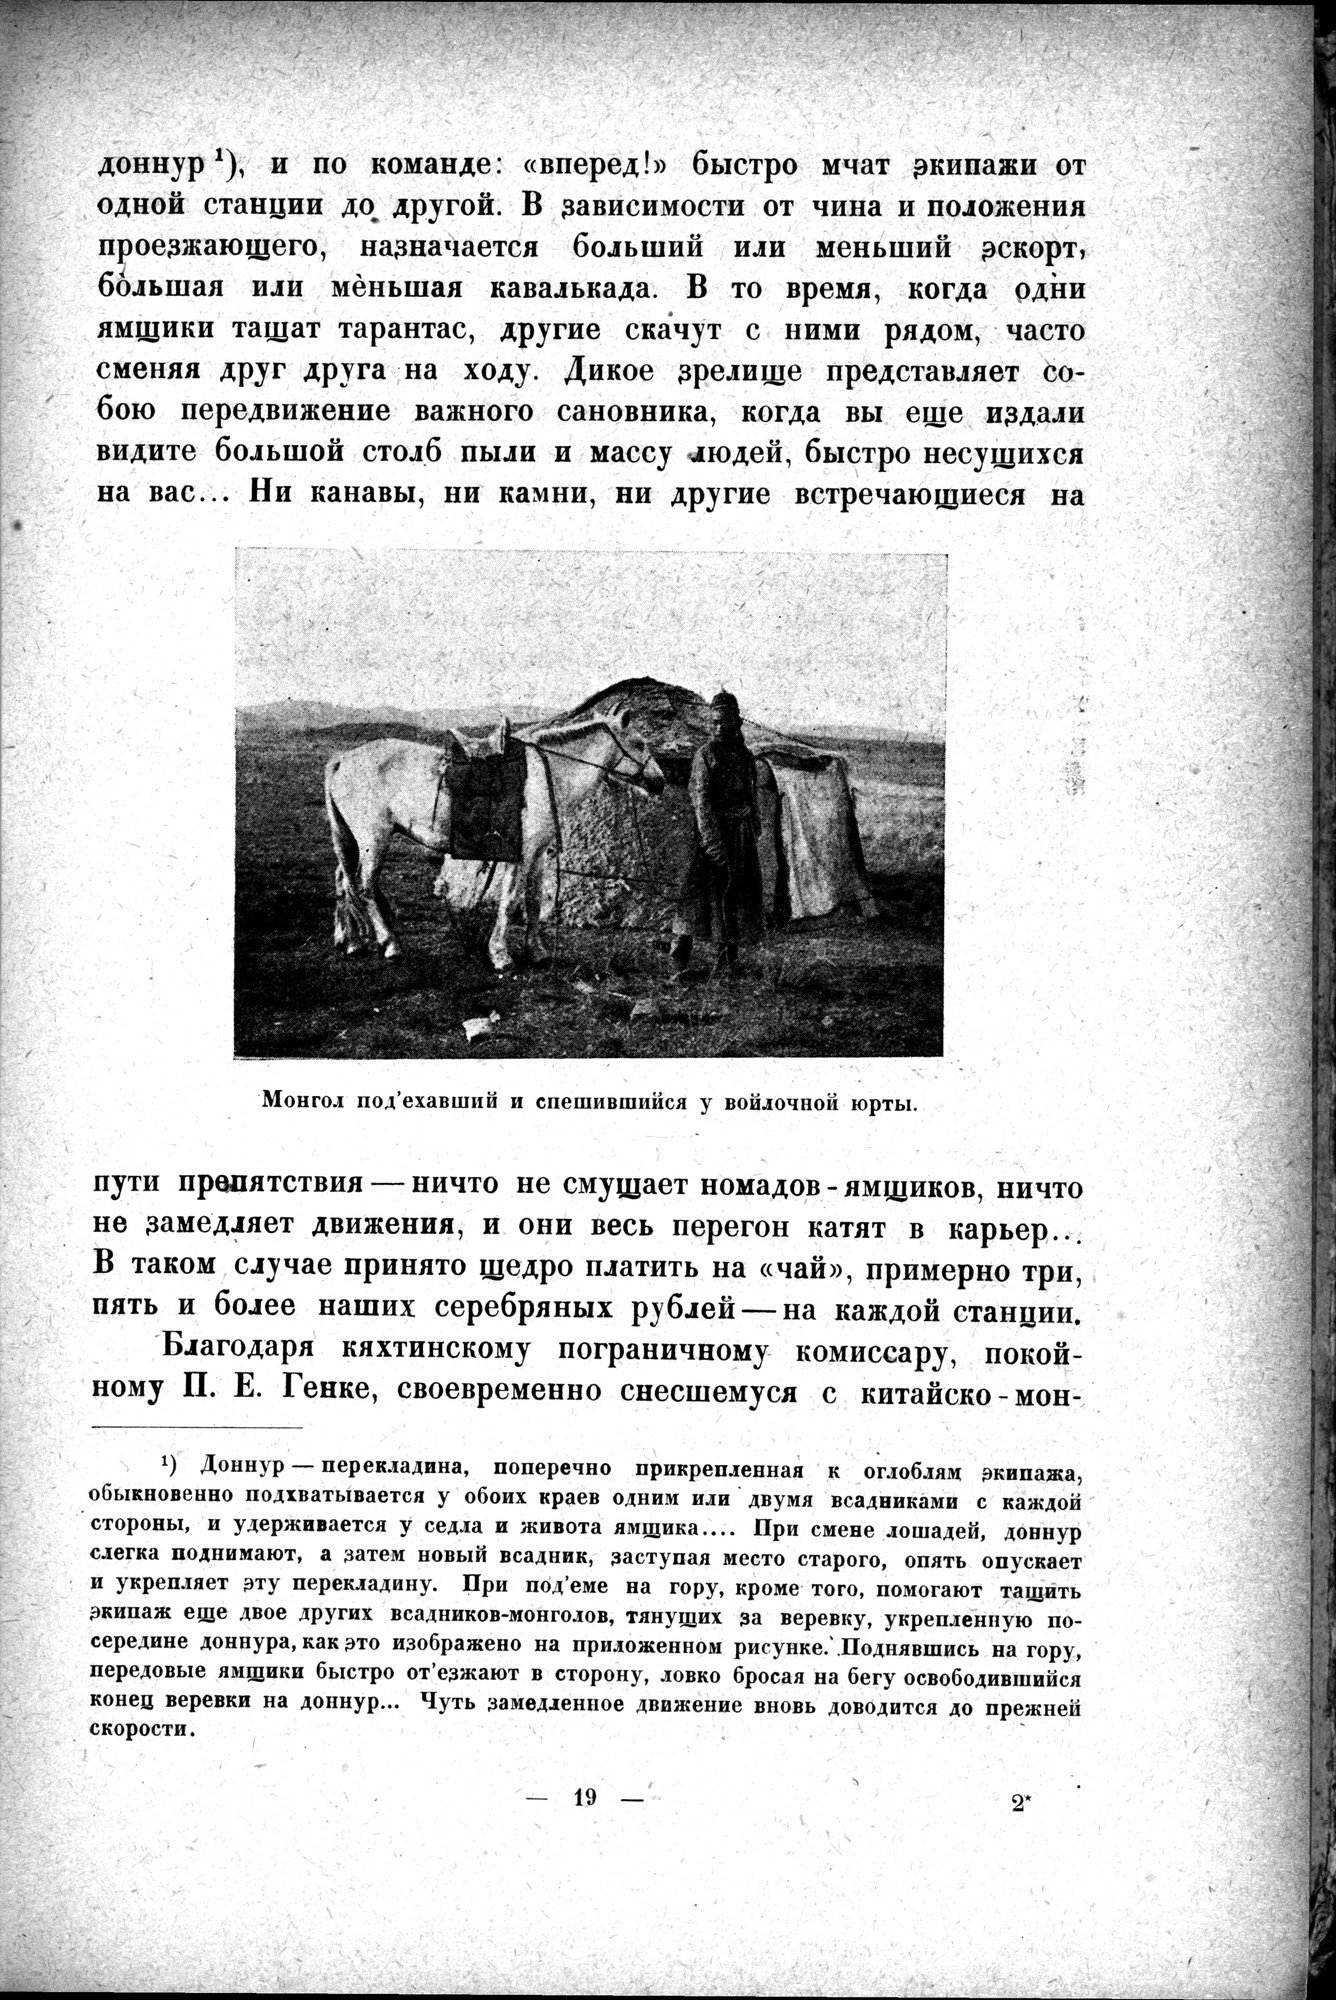 Mongoliya i Amdo i mertby gorod Khara-Khoto : vol.1 / Page 35 (Grayscale High Resolution Image)